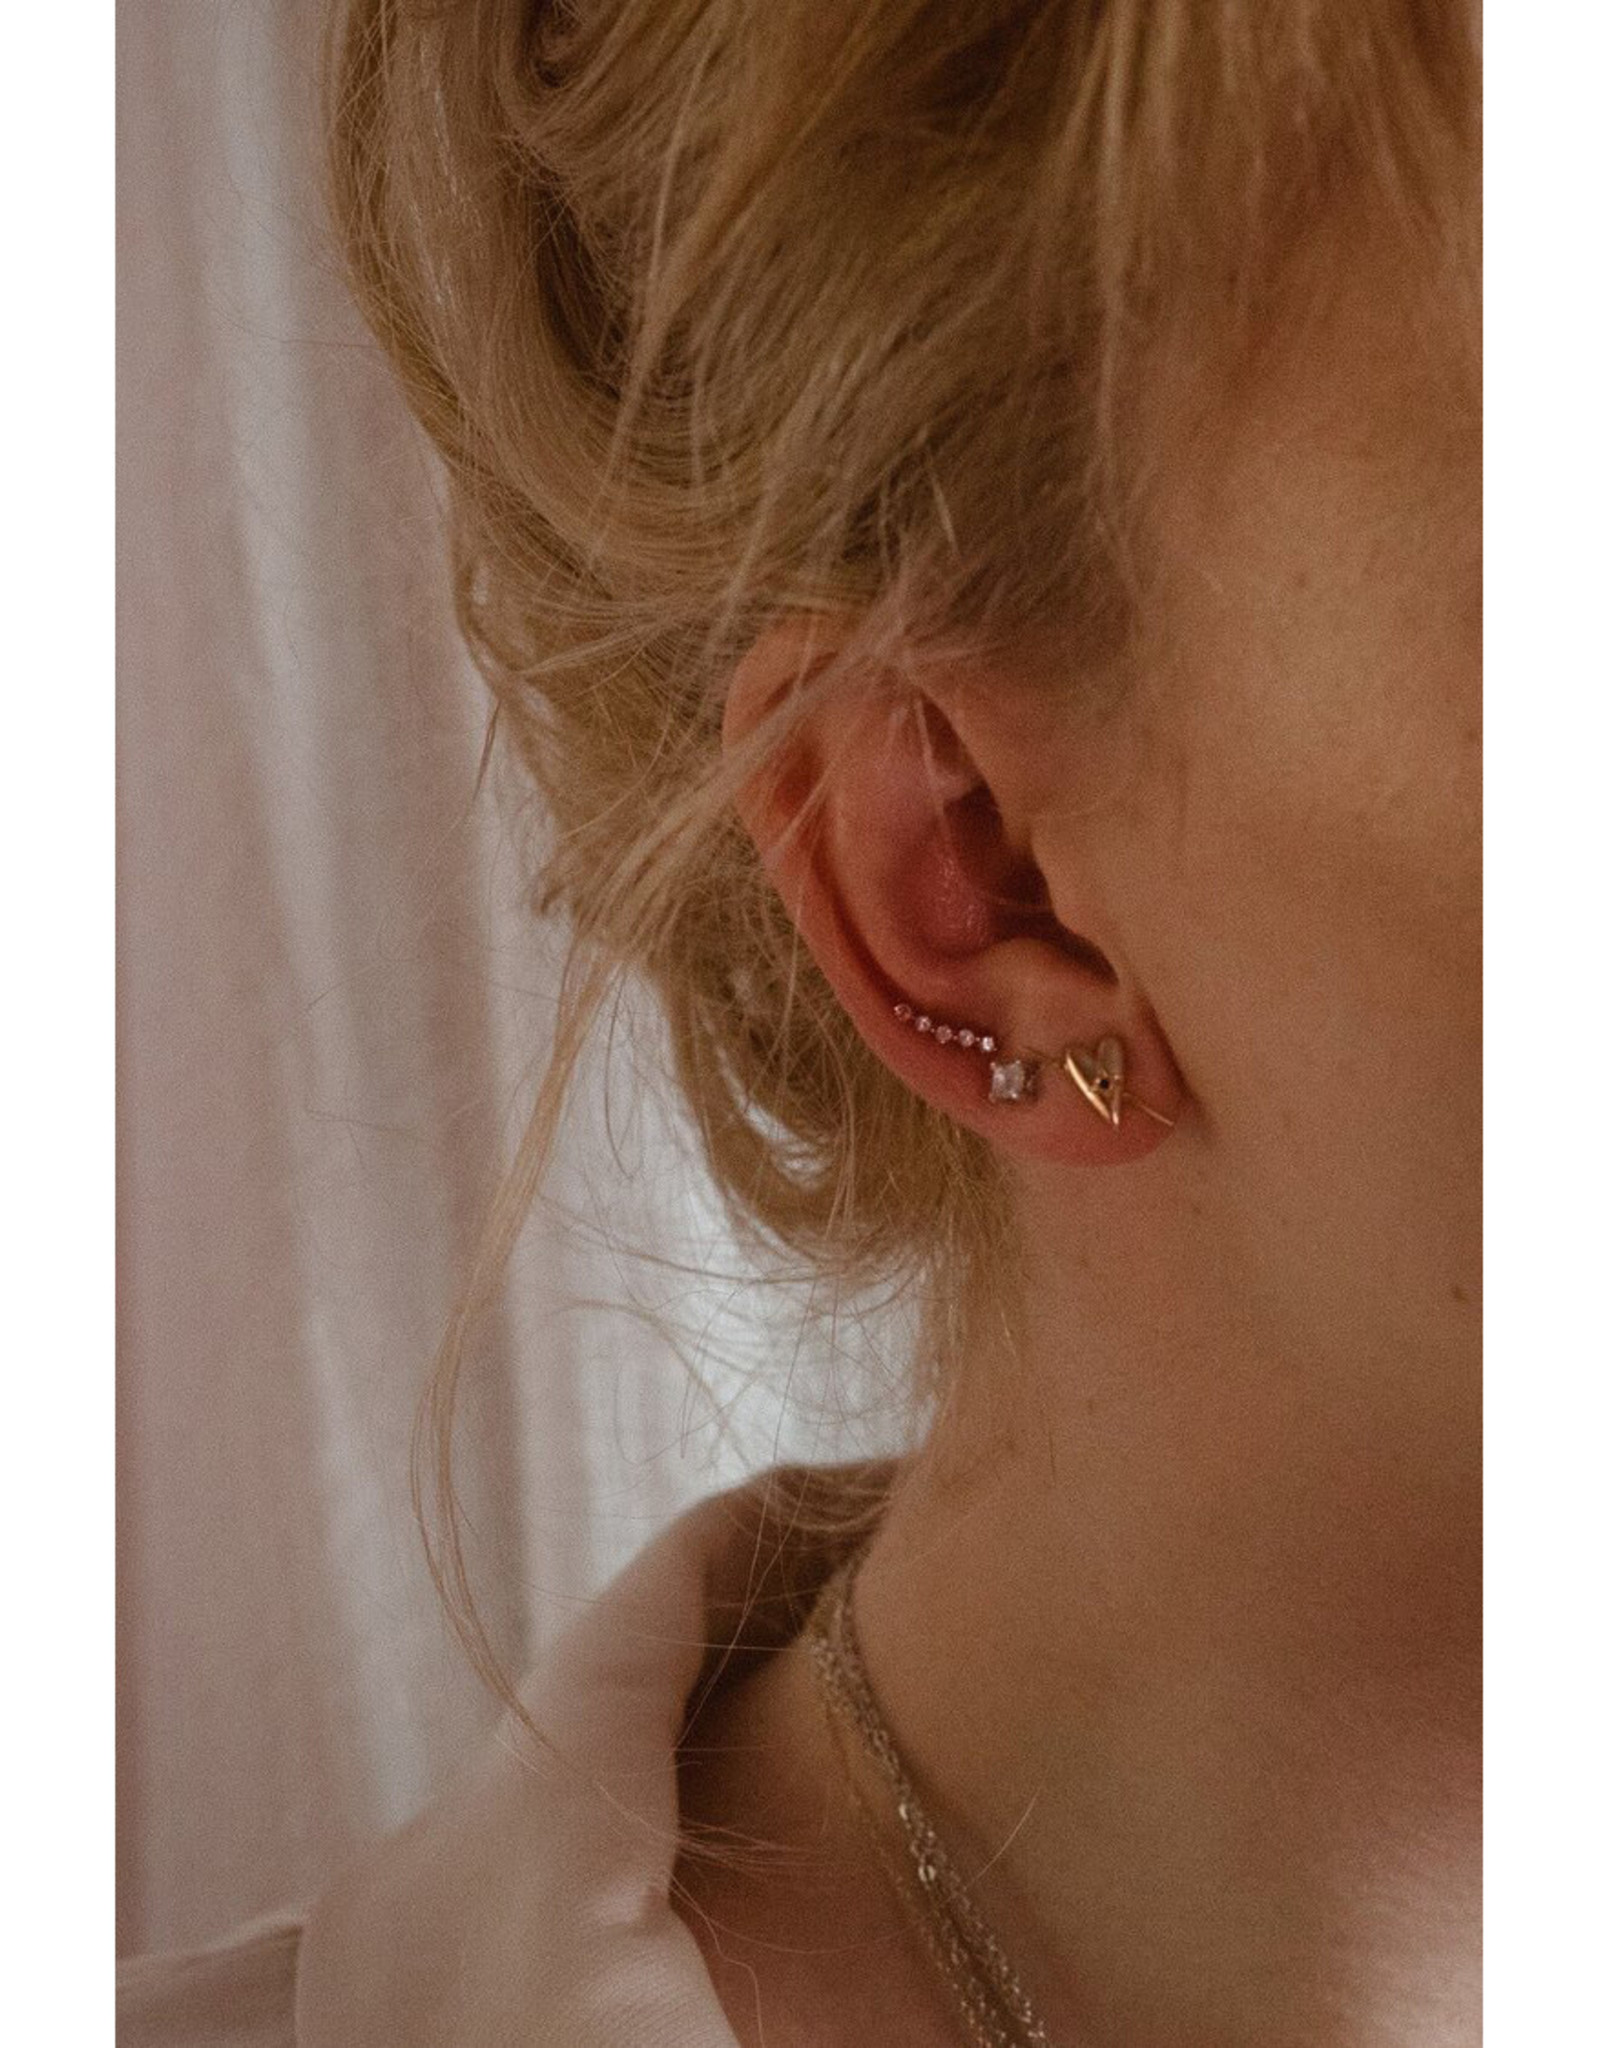 Sarah Mulder Jewelry Gold Lady Ear Climbers - Onyx